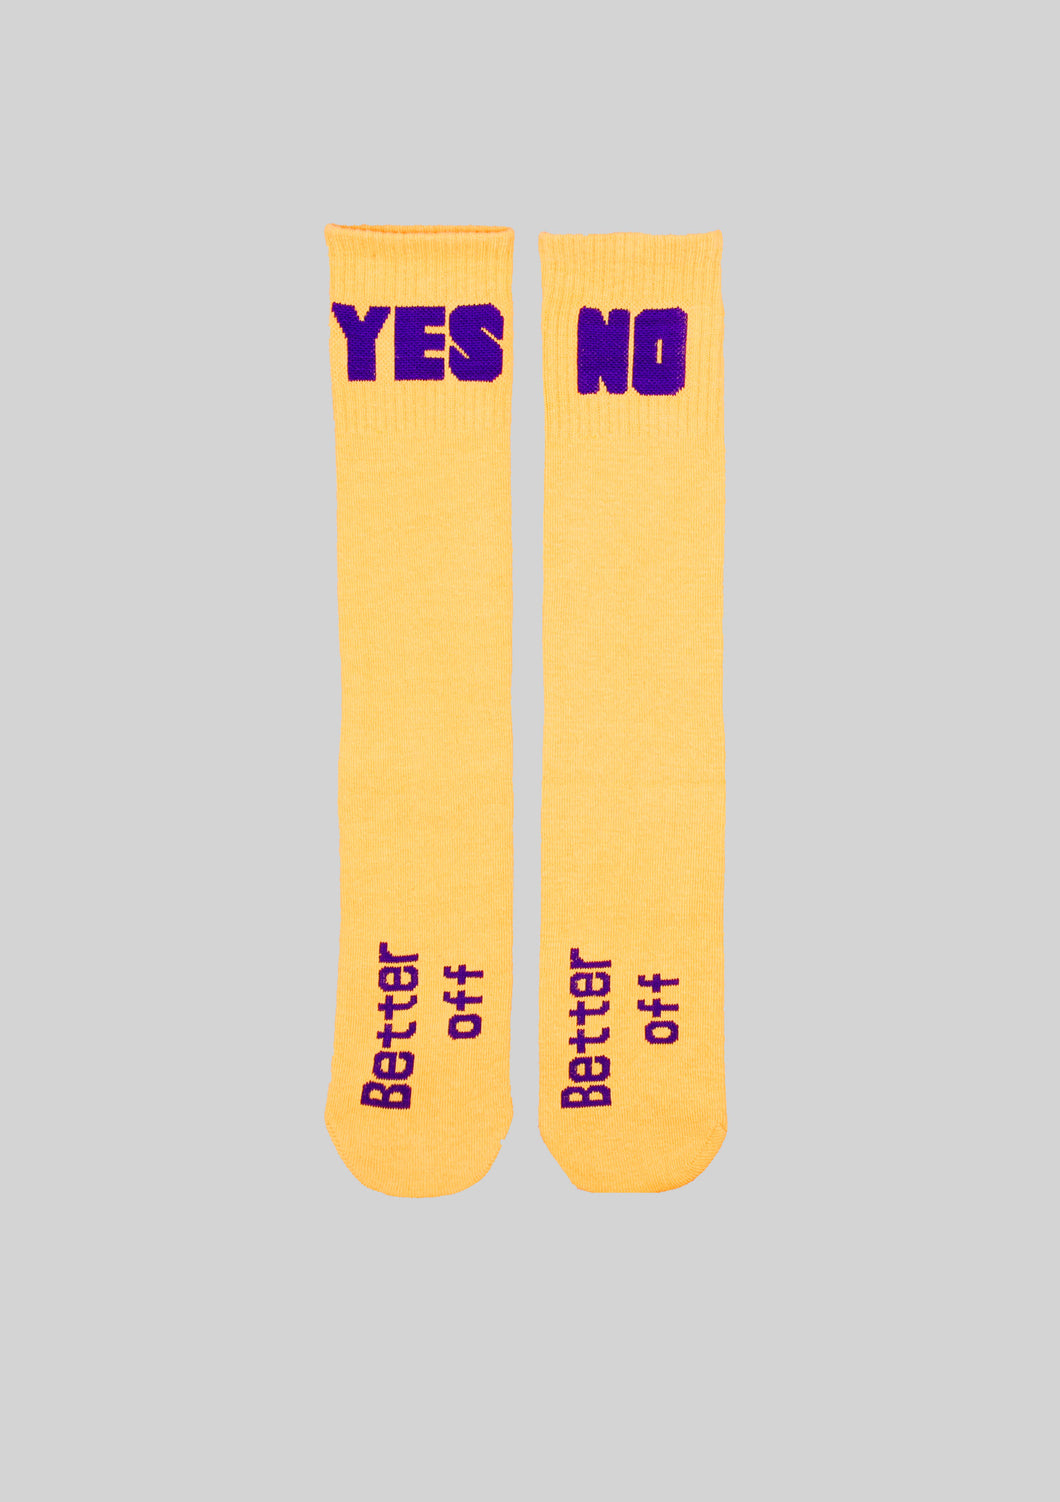 Yes/No Yellow Socks